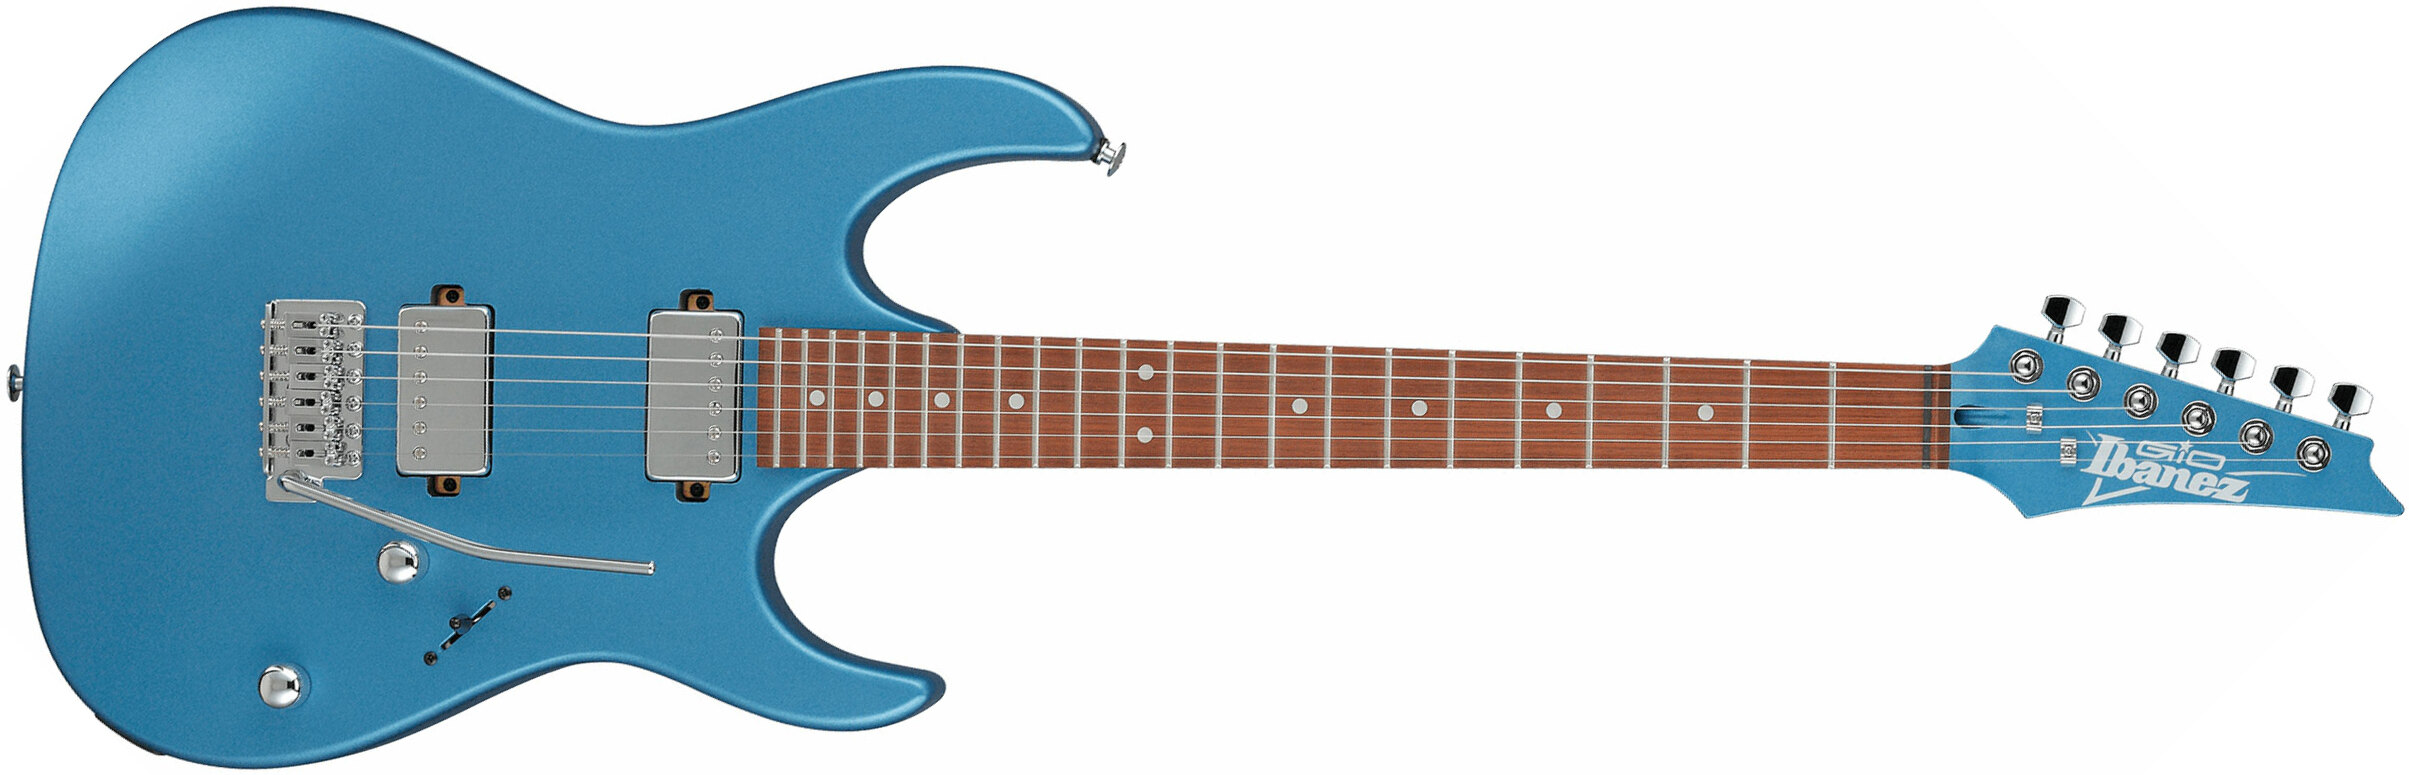 Ibanez Grx120sp Mlm Gio 2h Trem Jat - Metallic Light Blue Matte - Str shape electric guitar - Main picture